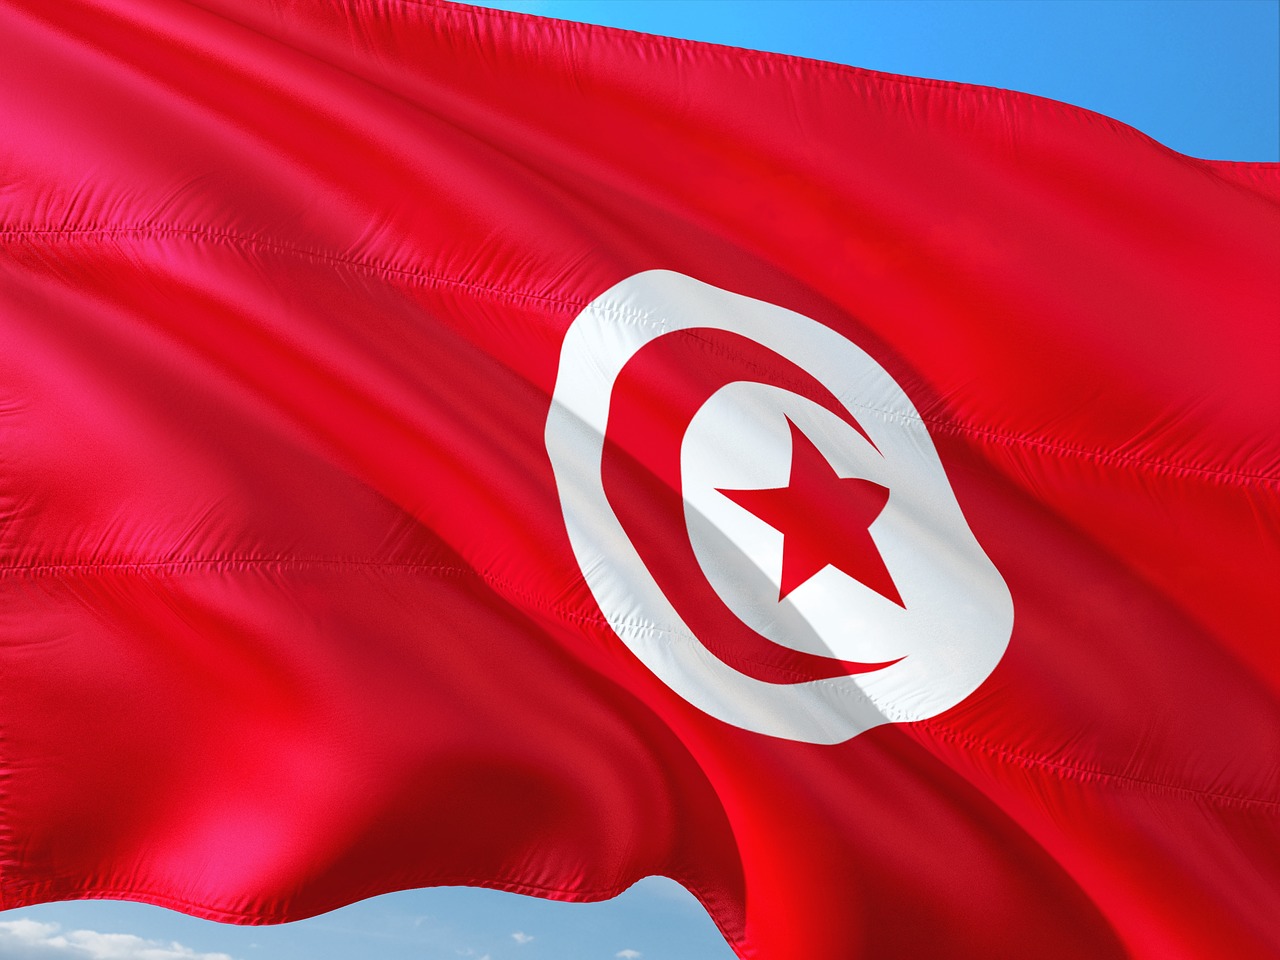 Tunisia journalist union demands immediate release of detained reporter